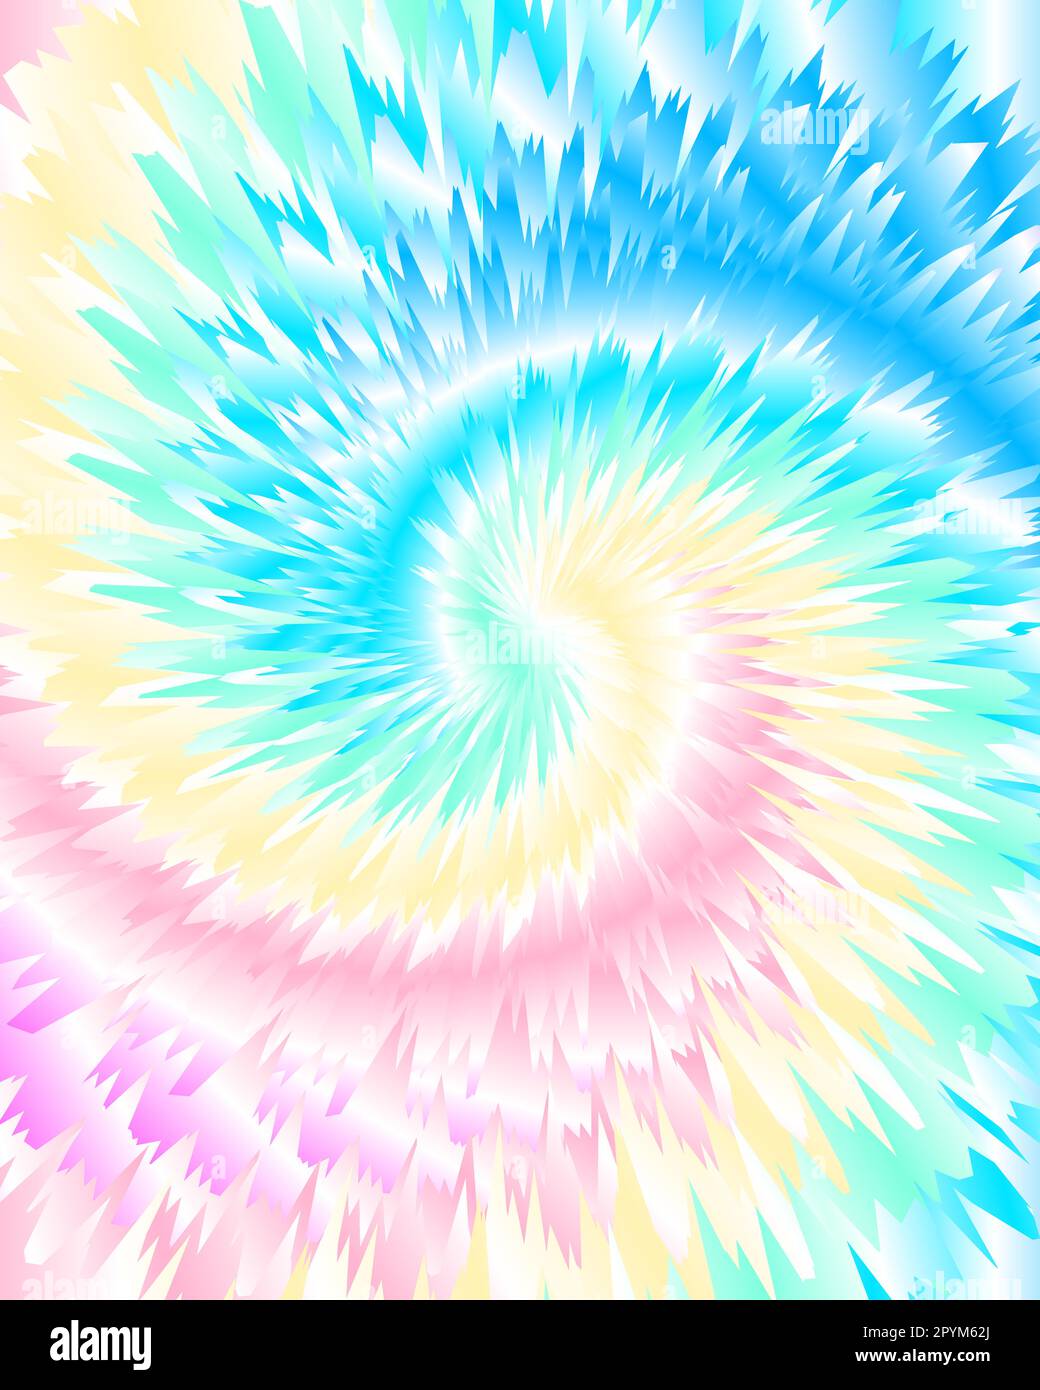 Abstrakte festliche bunte Hintergrund, Pastell Regenbogen Krawatte Farbmuster, Vektor-Illustration. Crazy Boho Spiral Wirbel Farbe. Stock Vektor